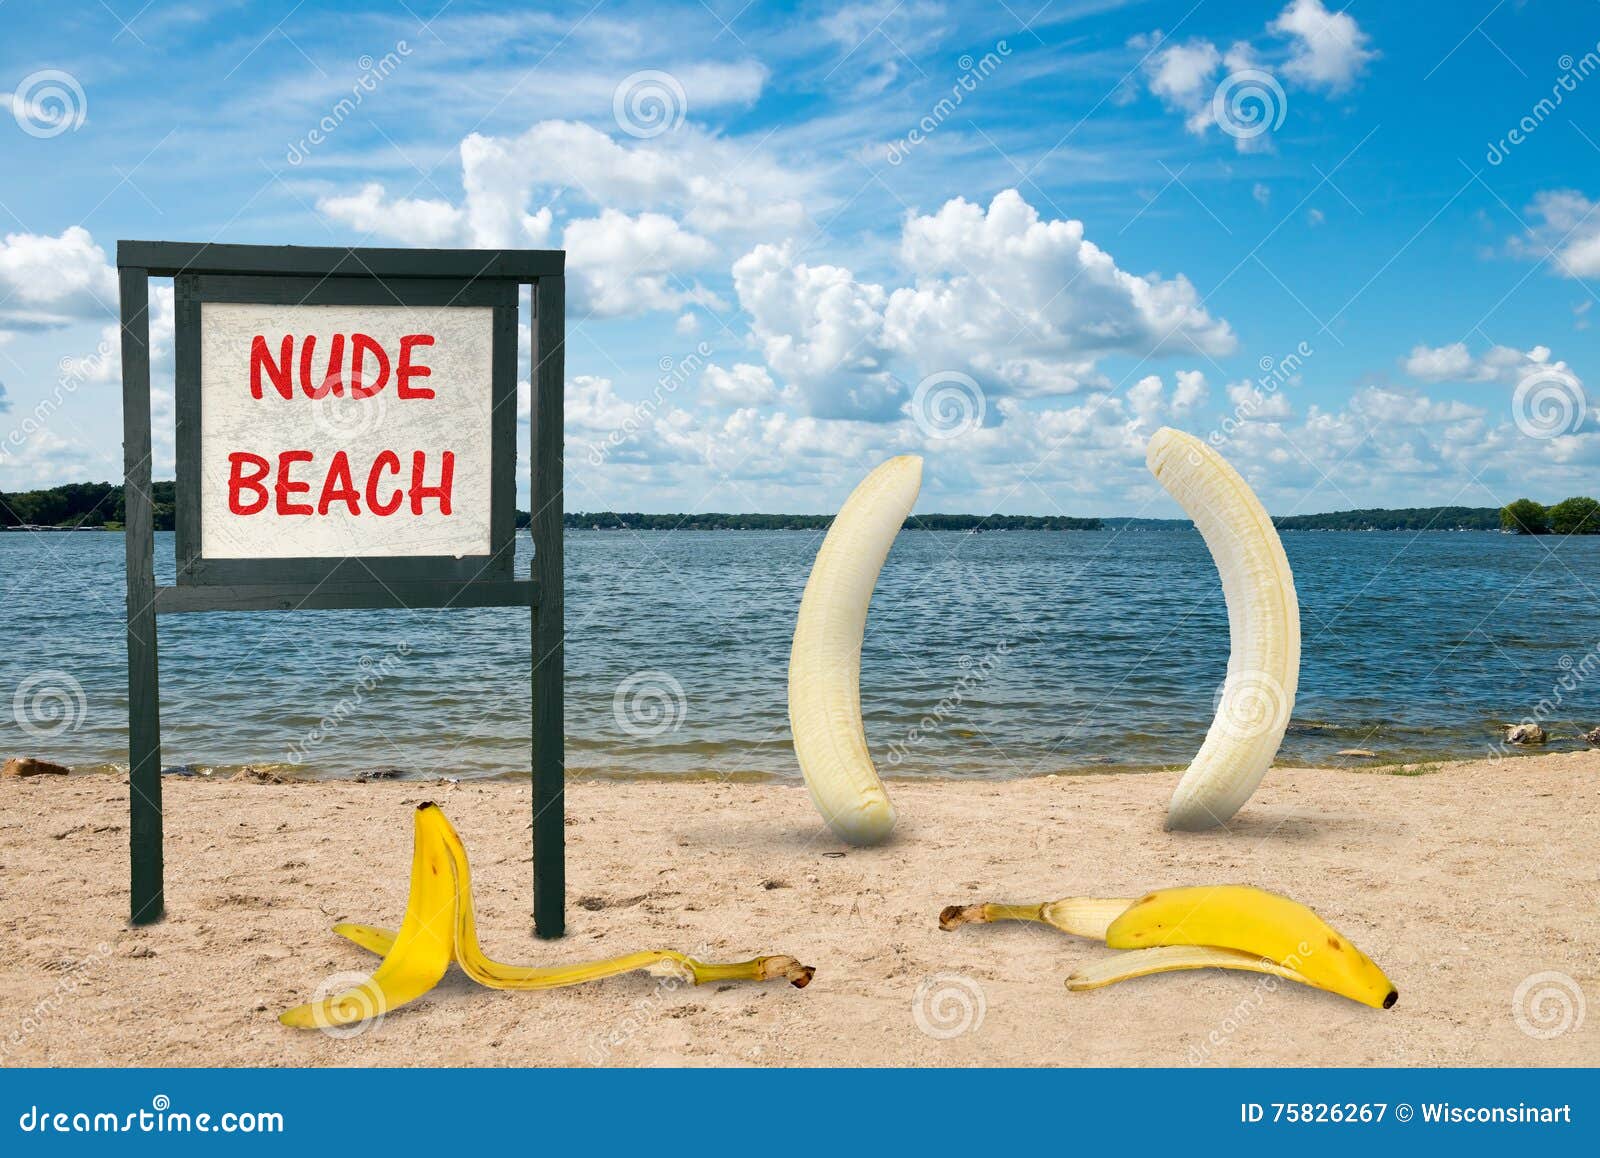 charlie cork share naked and funny beach photos